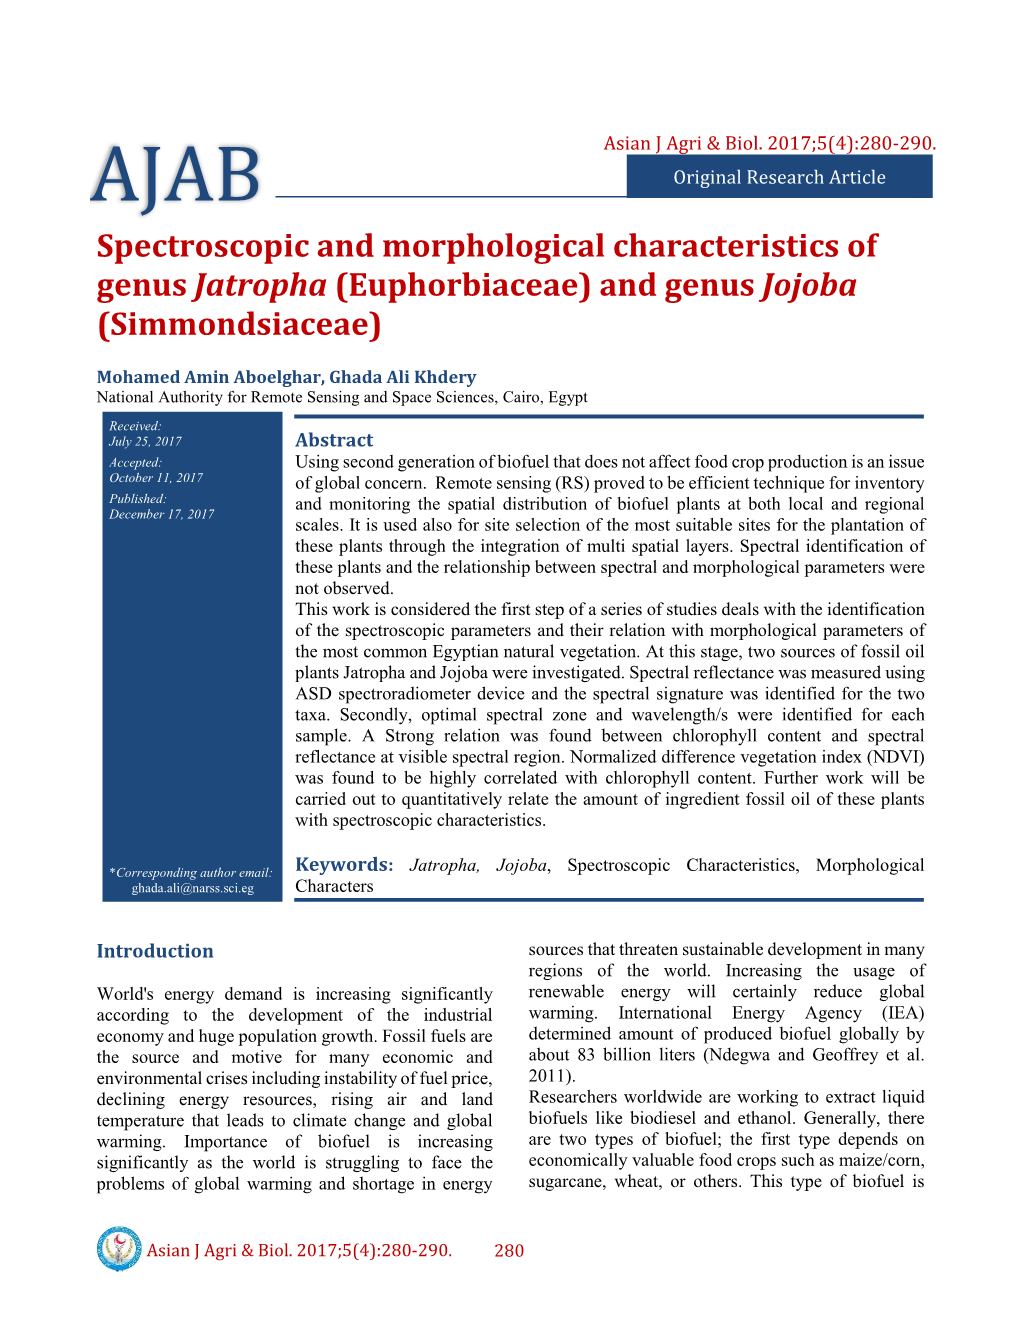 Spectroscopic and Morphological Characteristics of Genus Jatropha (Euphorbiaceae) and Genus Jojoba (Simmondsiaceae)